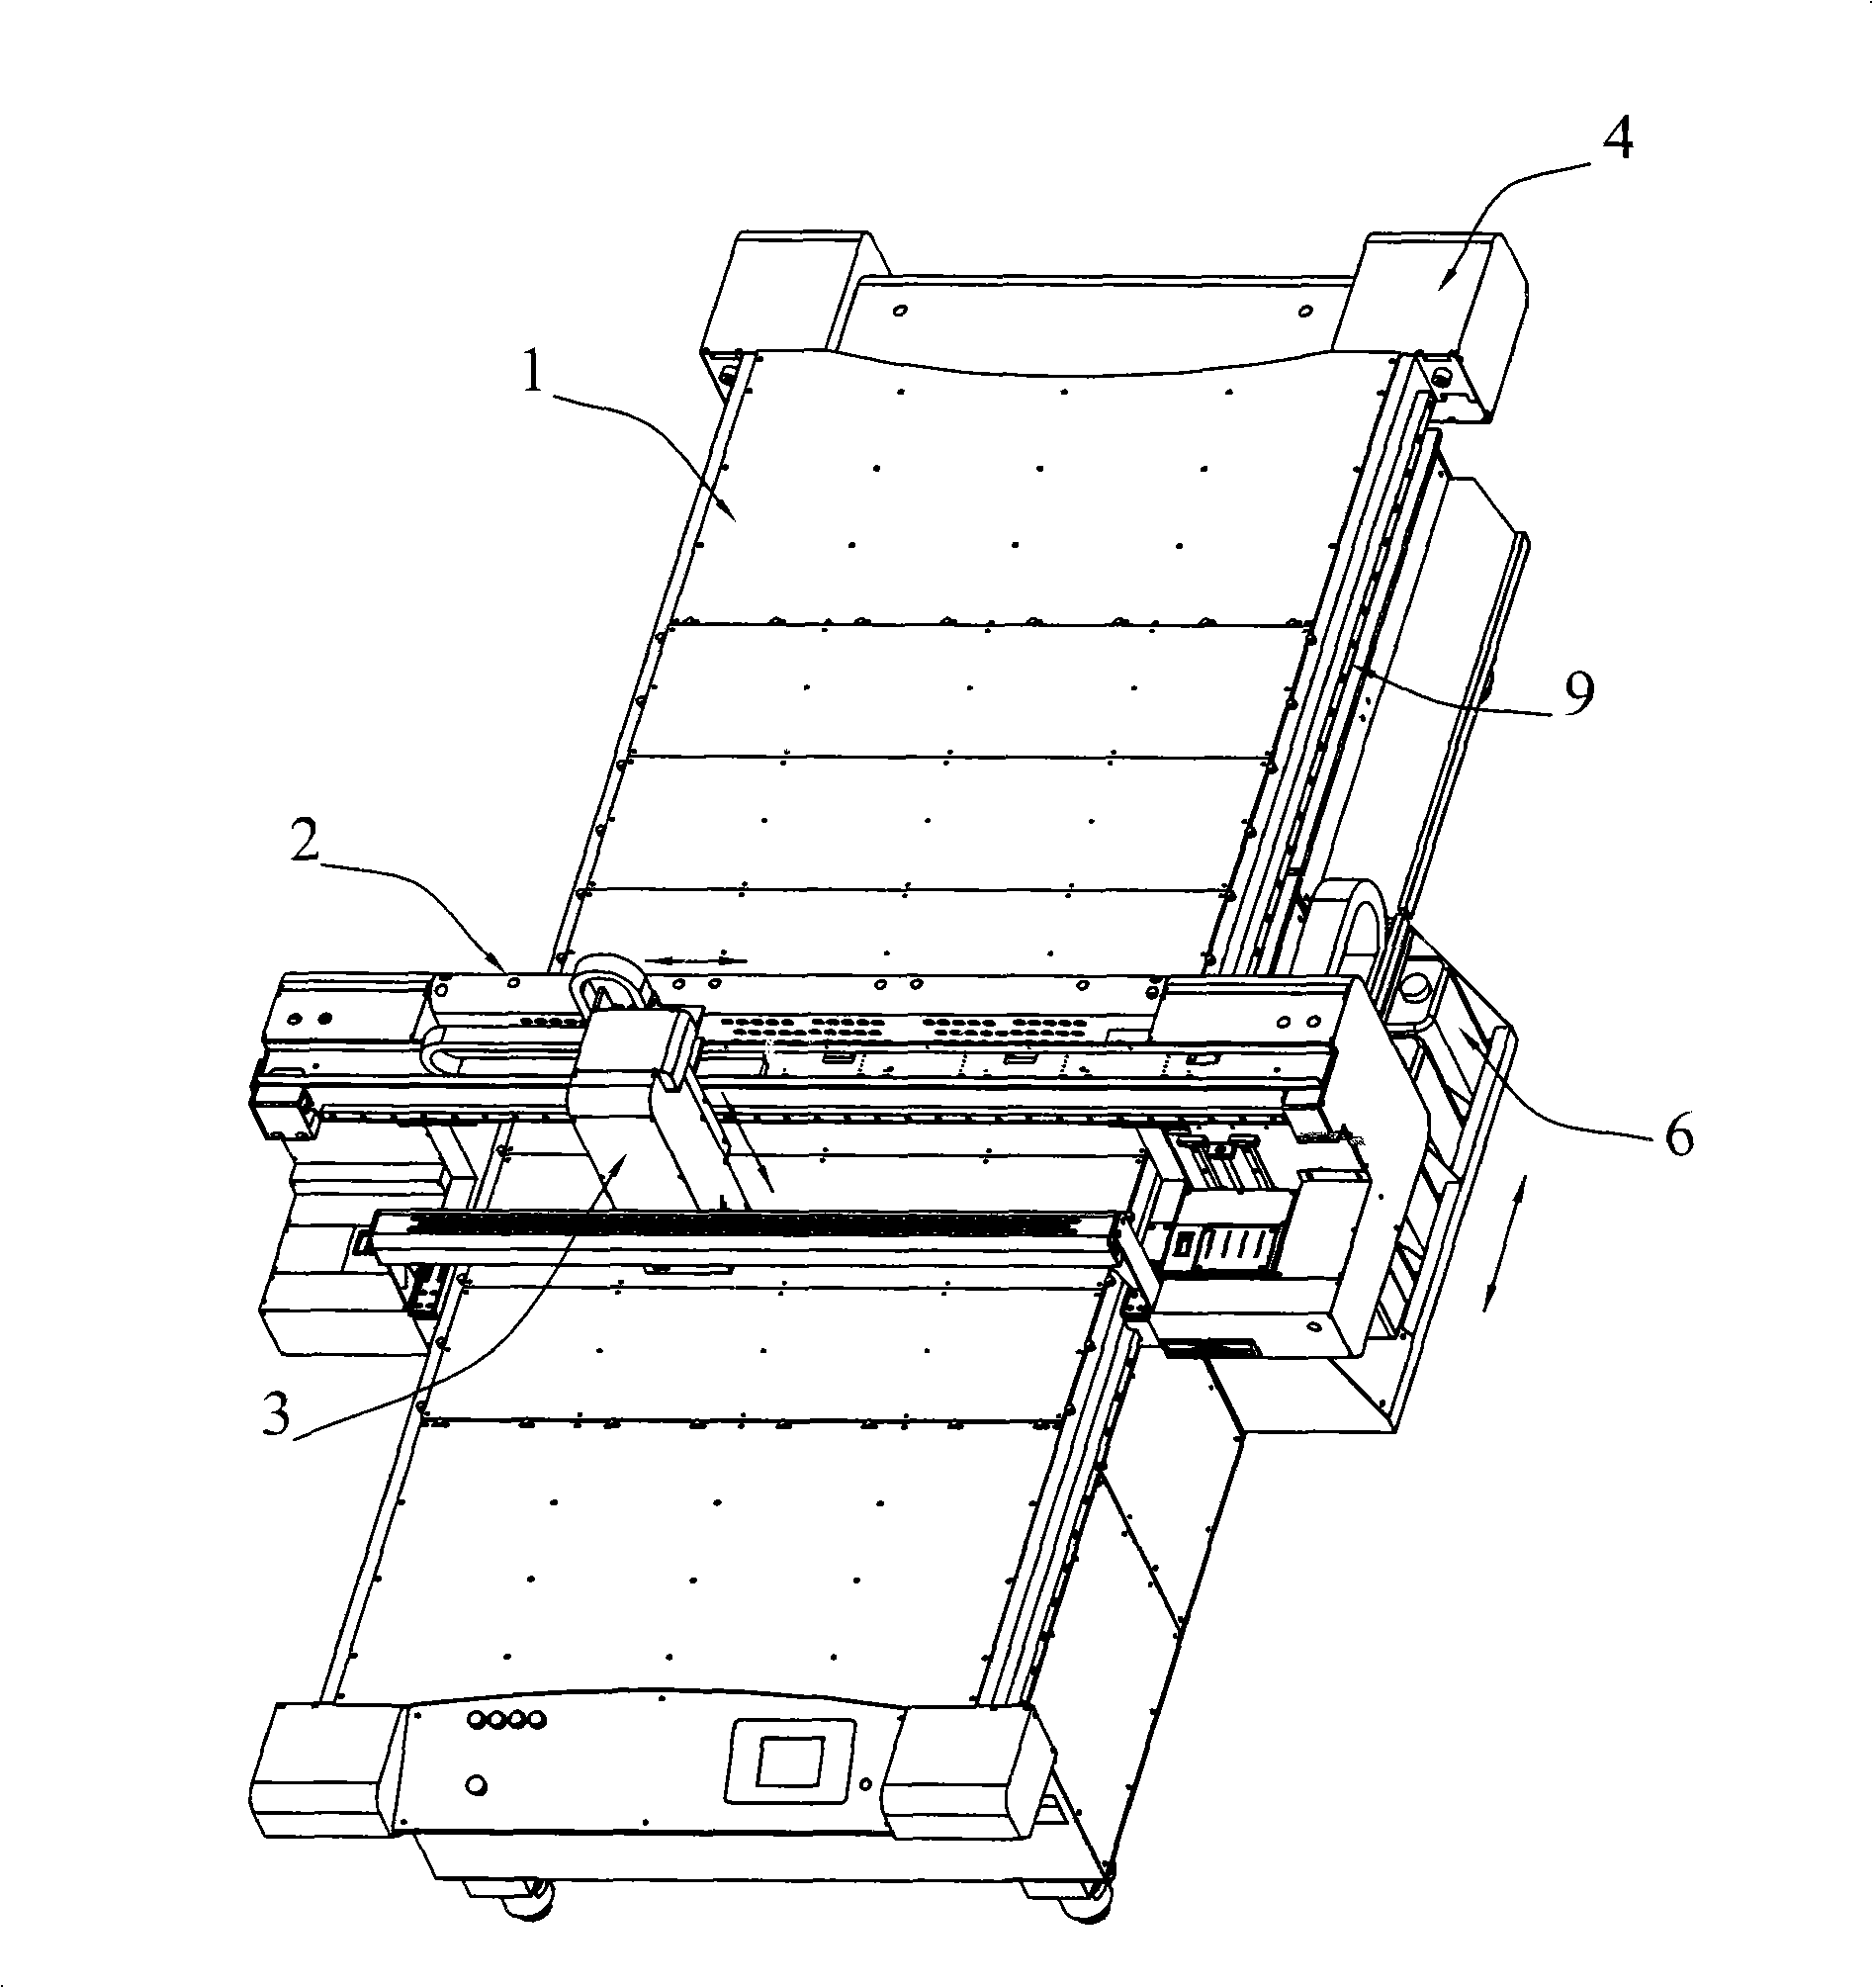 Print mechanism of flat-panel printer